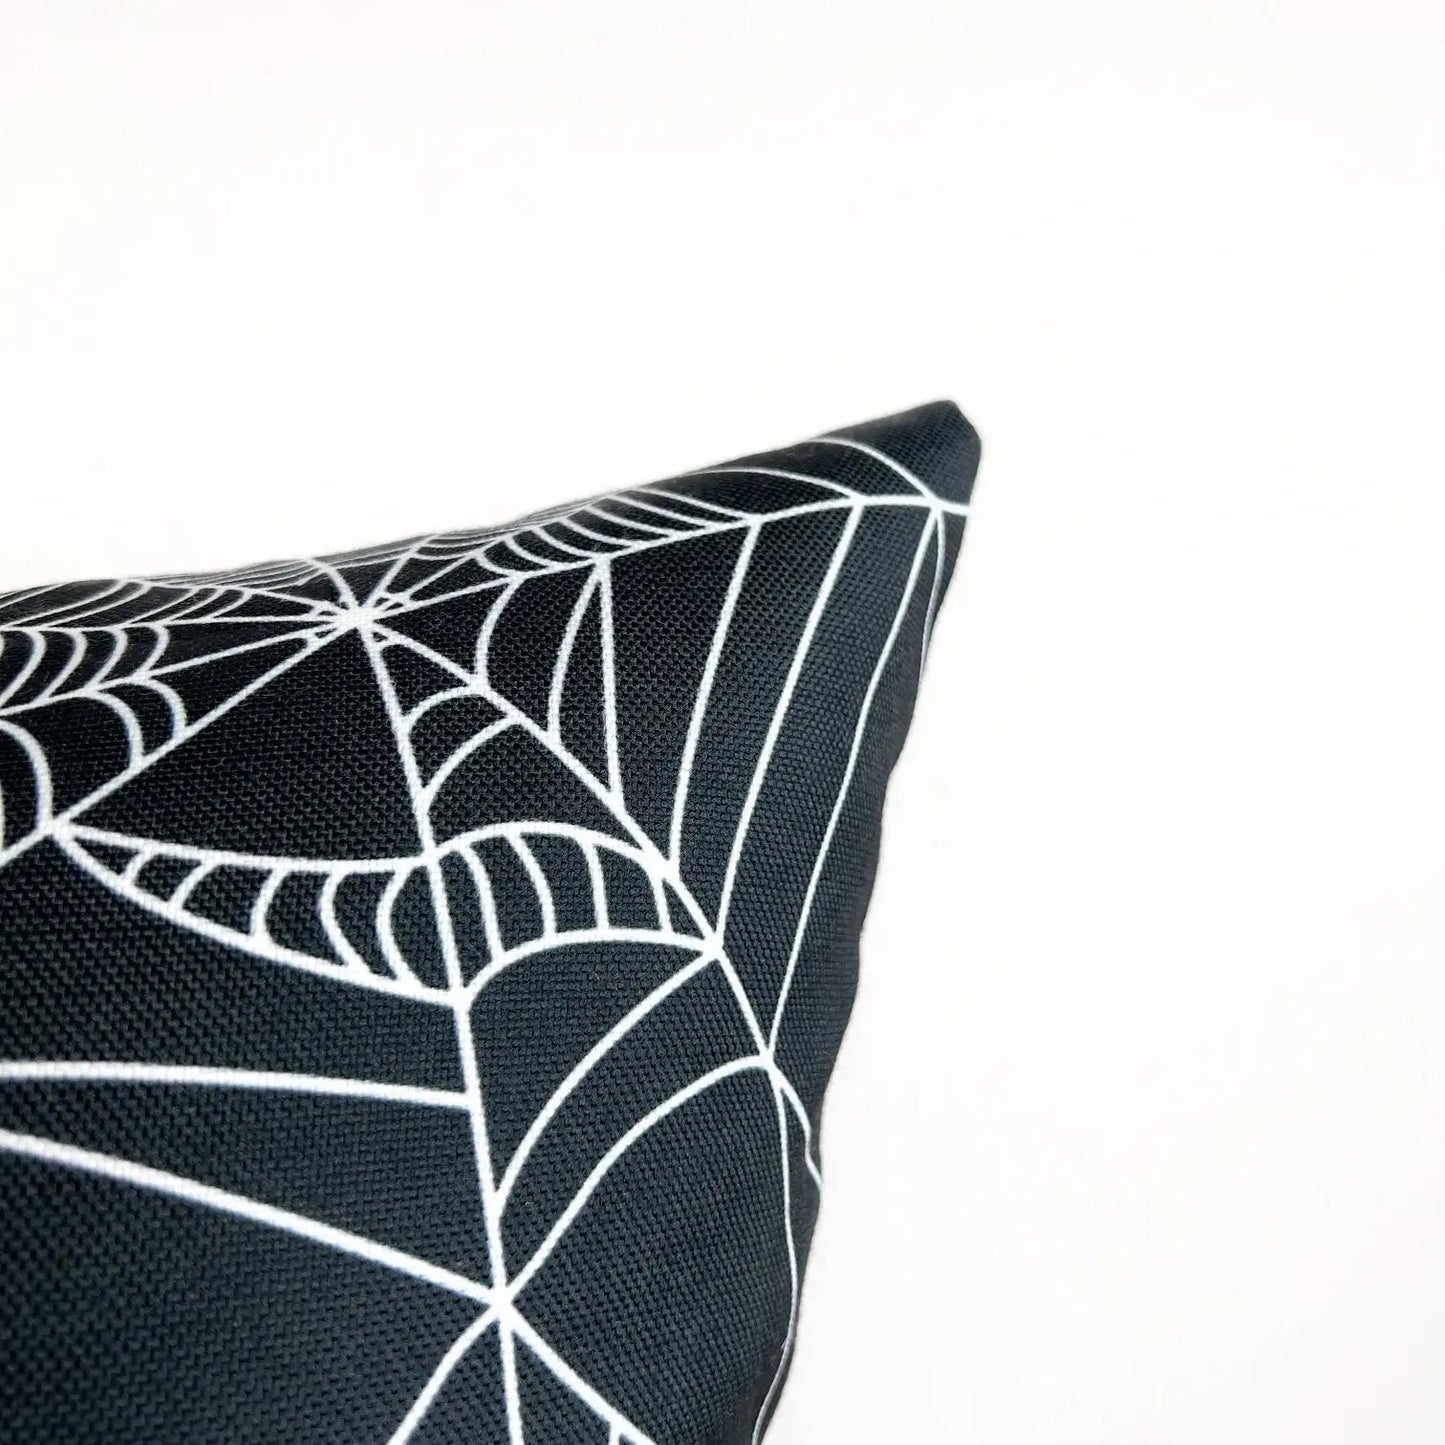 SpiderWeb Black Throw Pillow